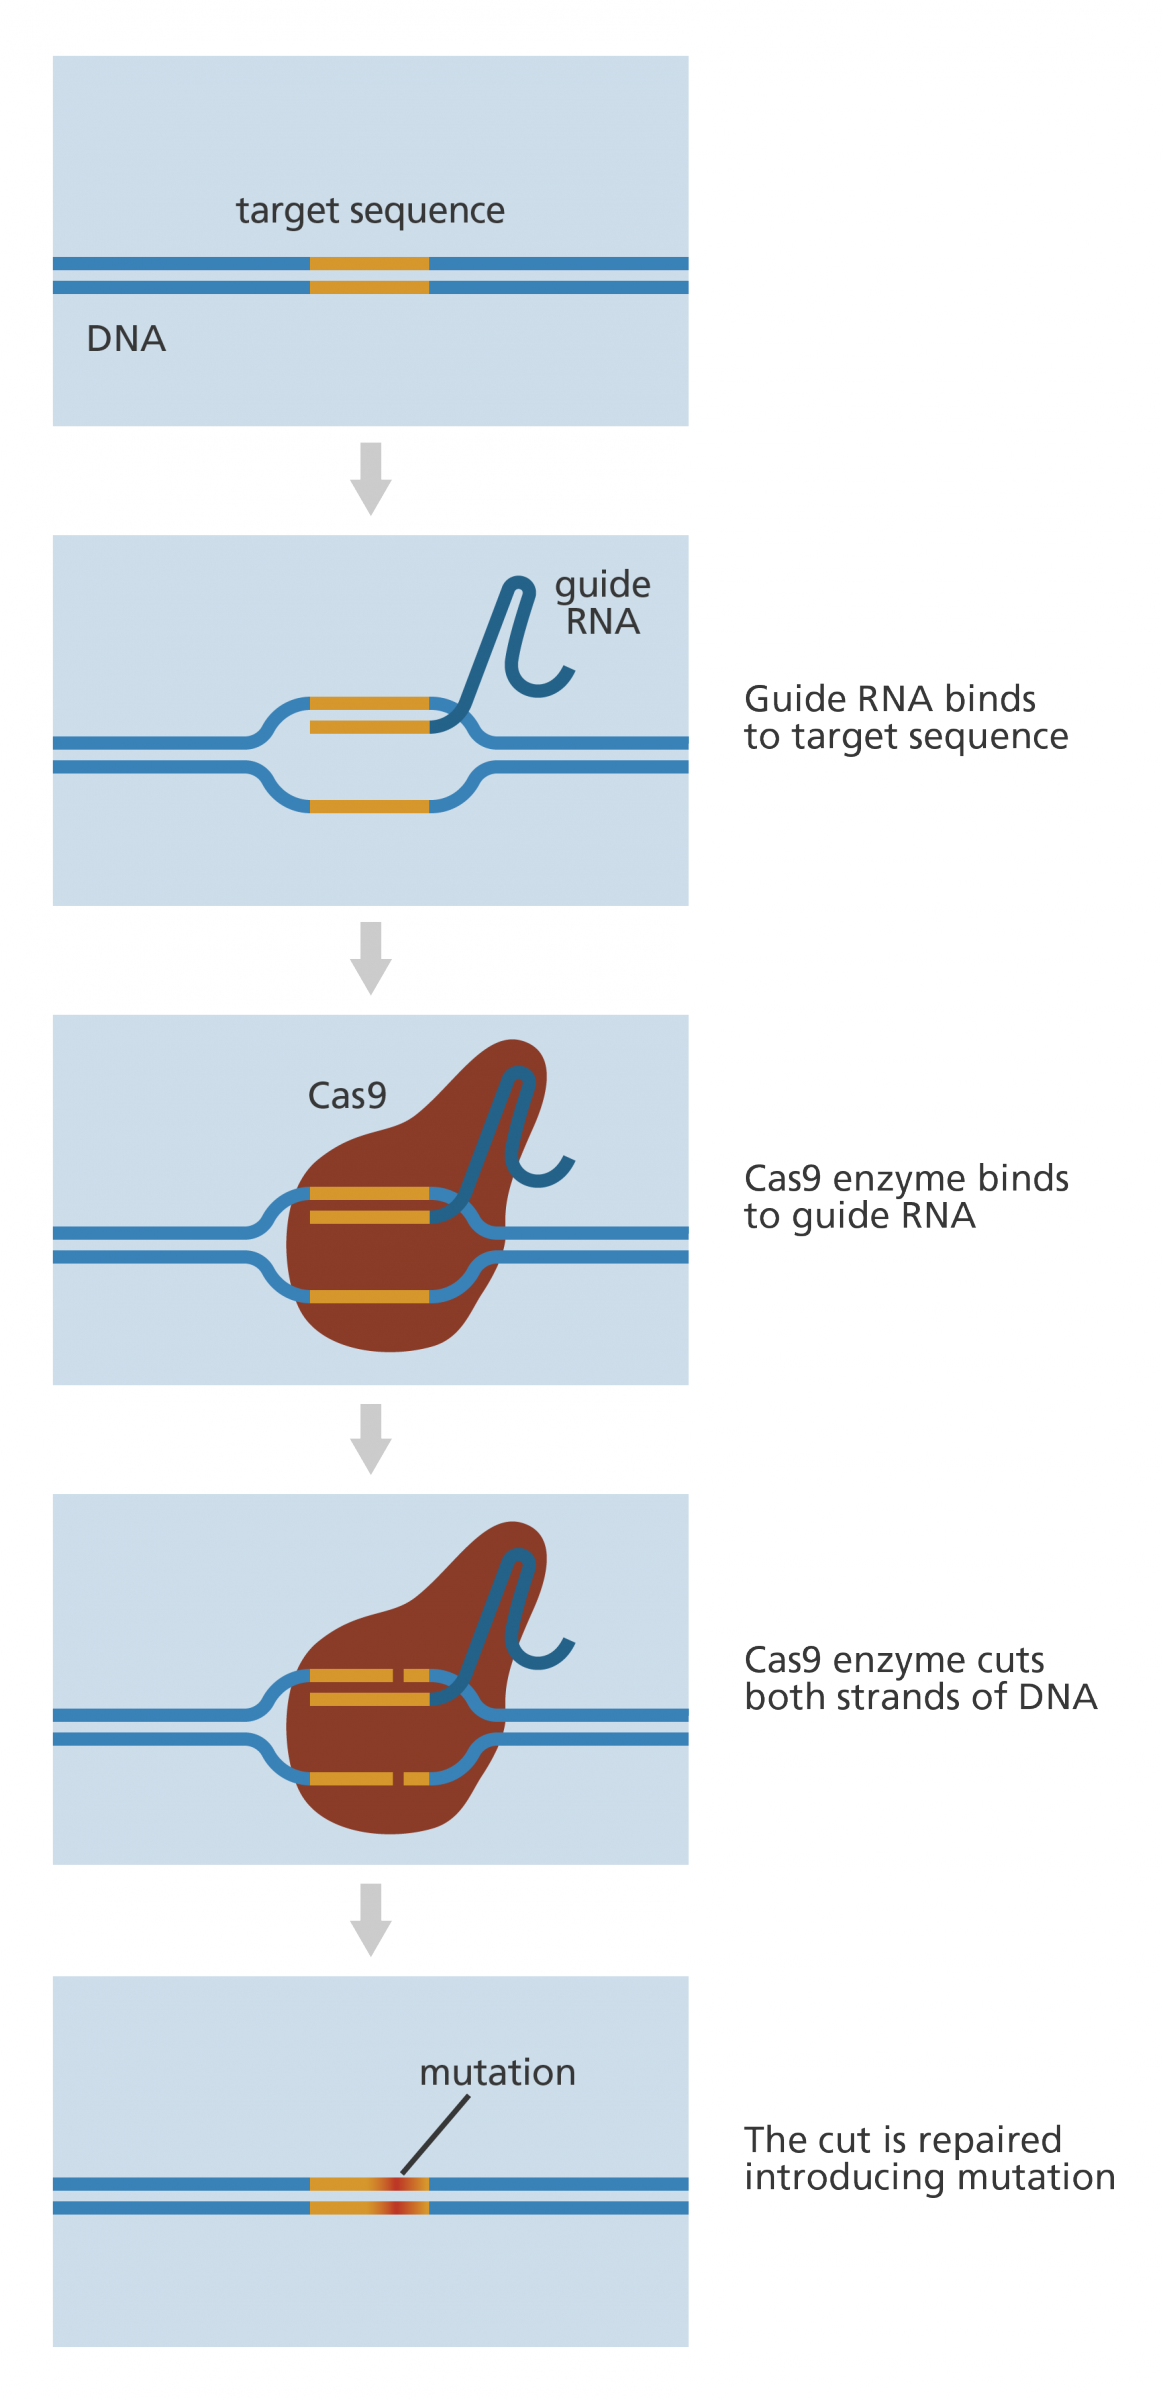 Guide RNA and CRISPR 